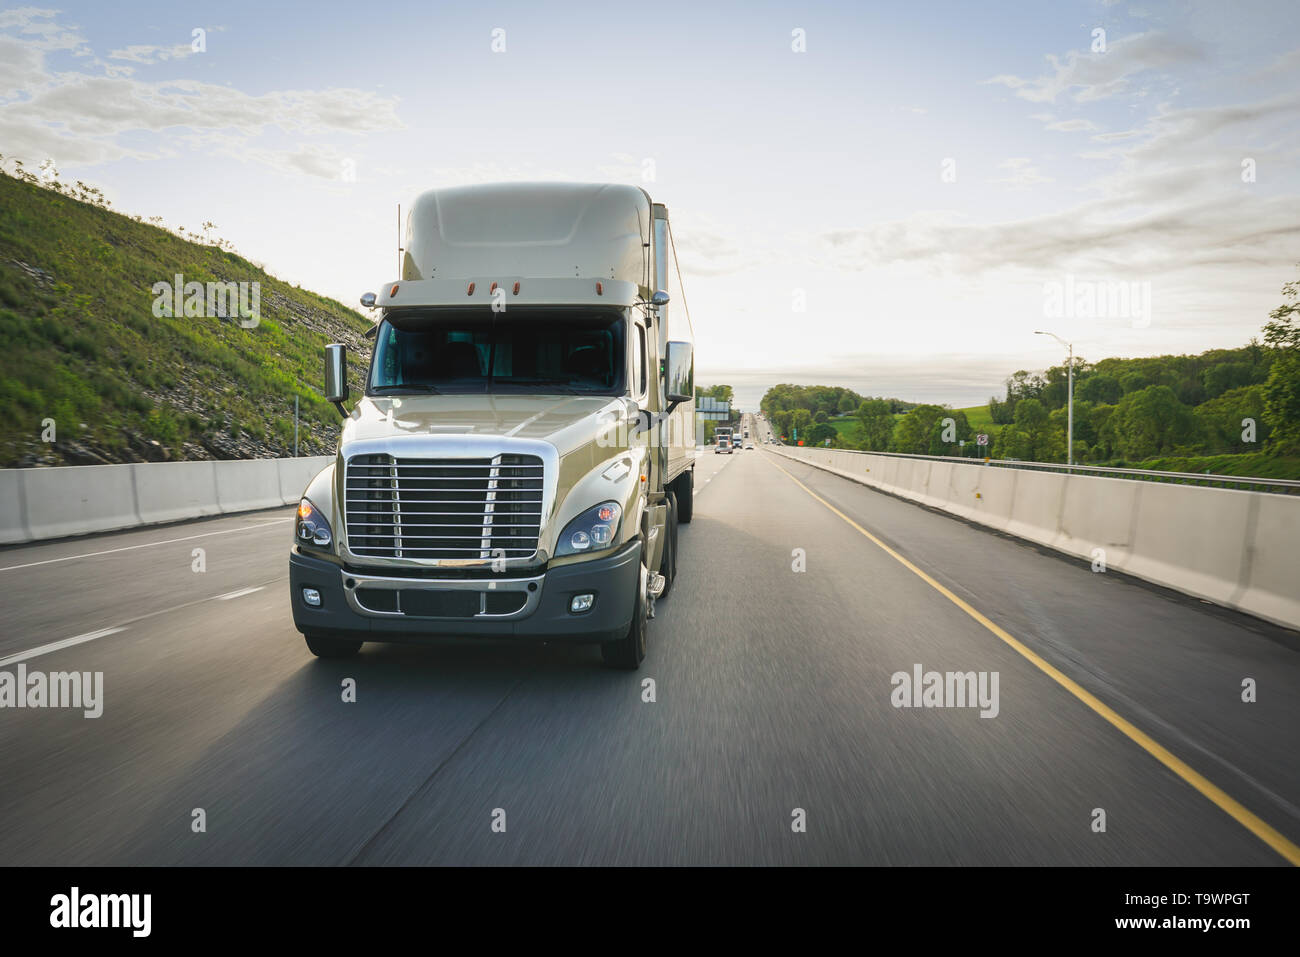 White 18 wheeler lorry semi truck tractor trailer on highway Stock Photo